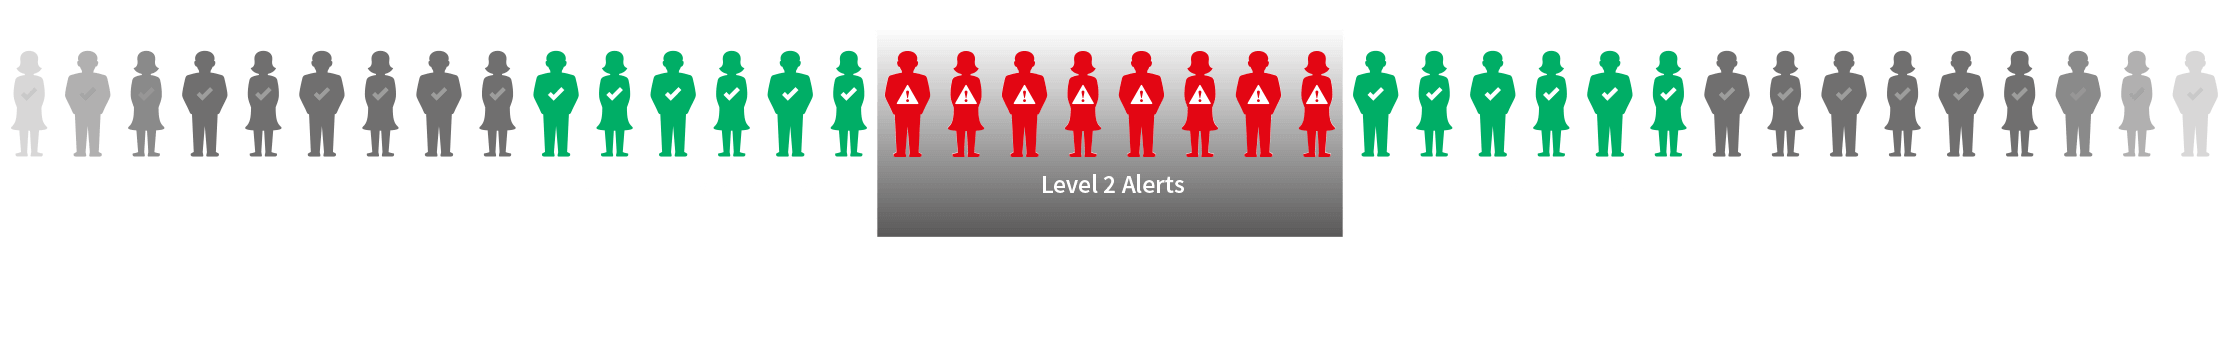 Level 2 Alerts